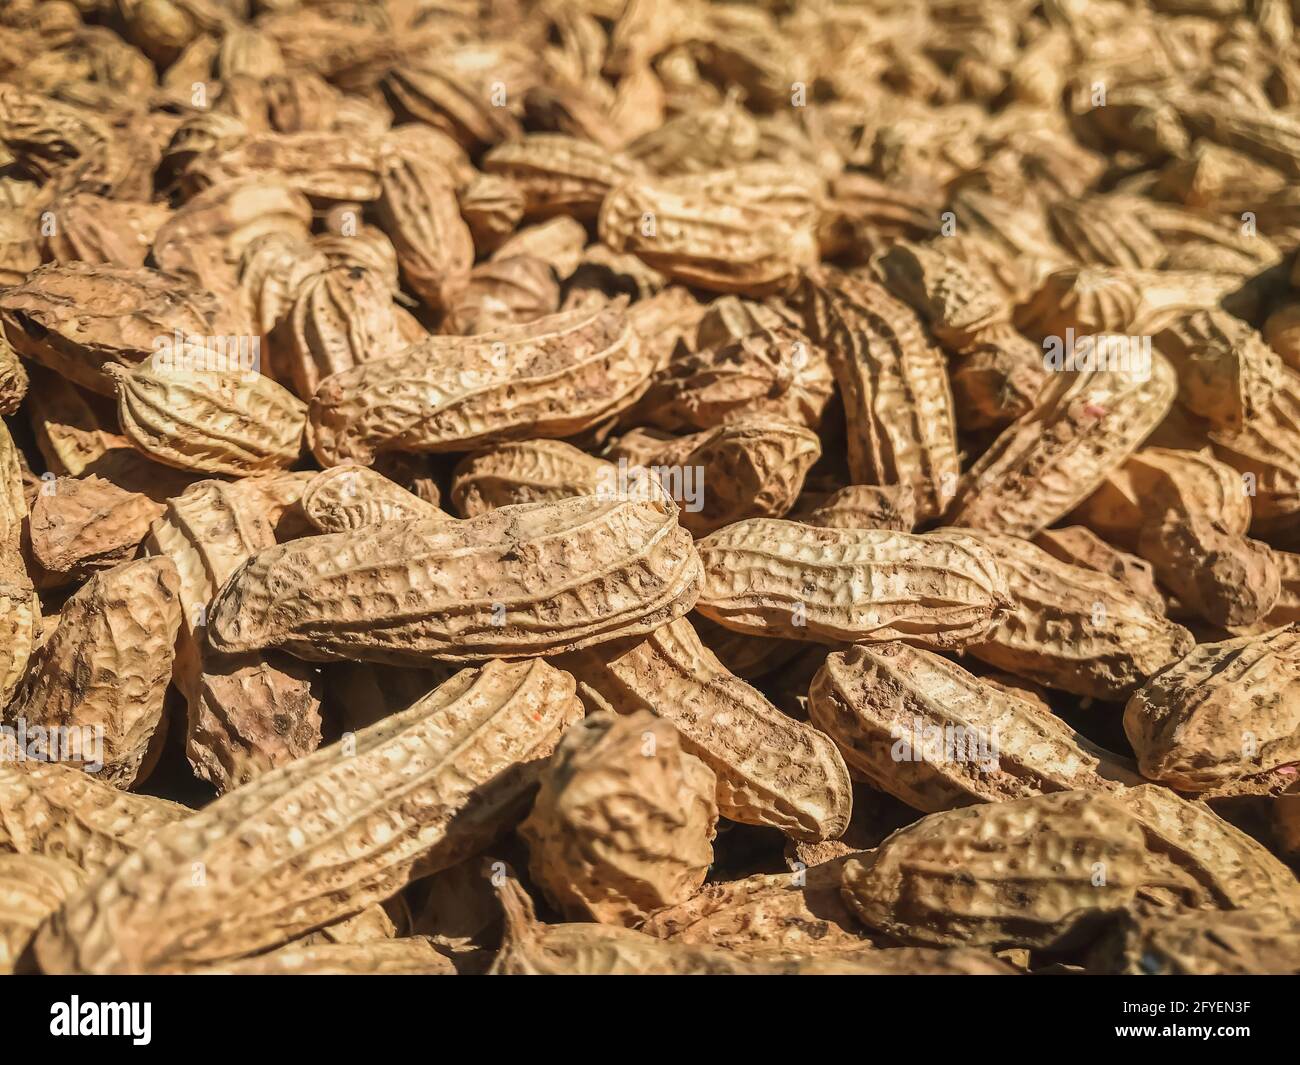 Close-up of Peanuts (Arachis hypogaea). Food background. Stock Photo